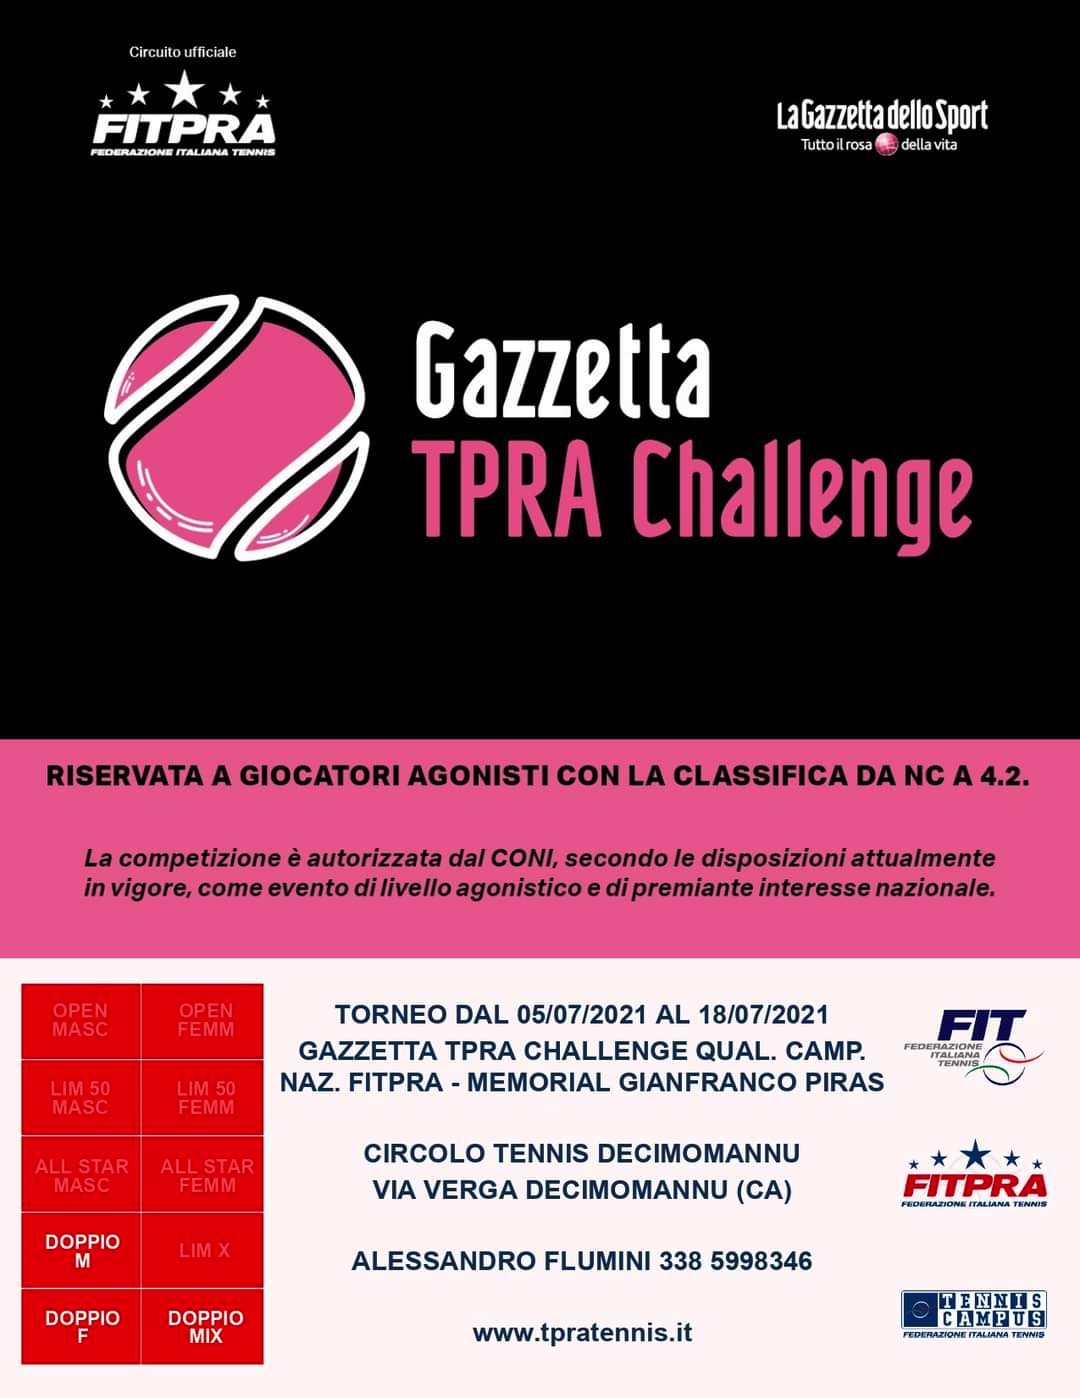 Gazzetta TPRA Challenge Memorial Gianfranco Piras